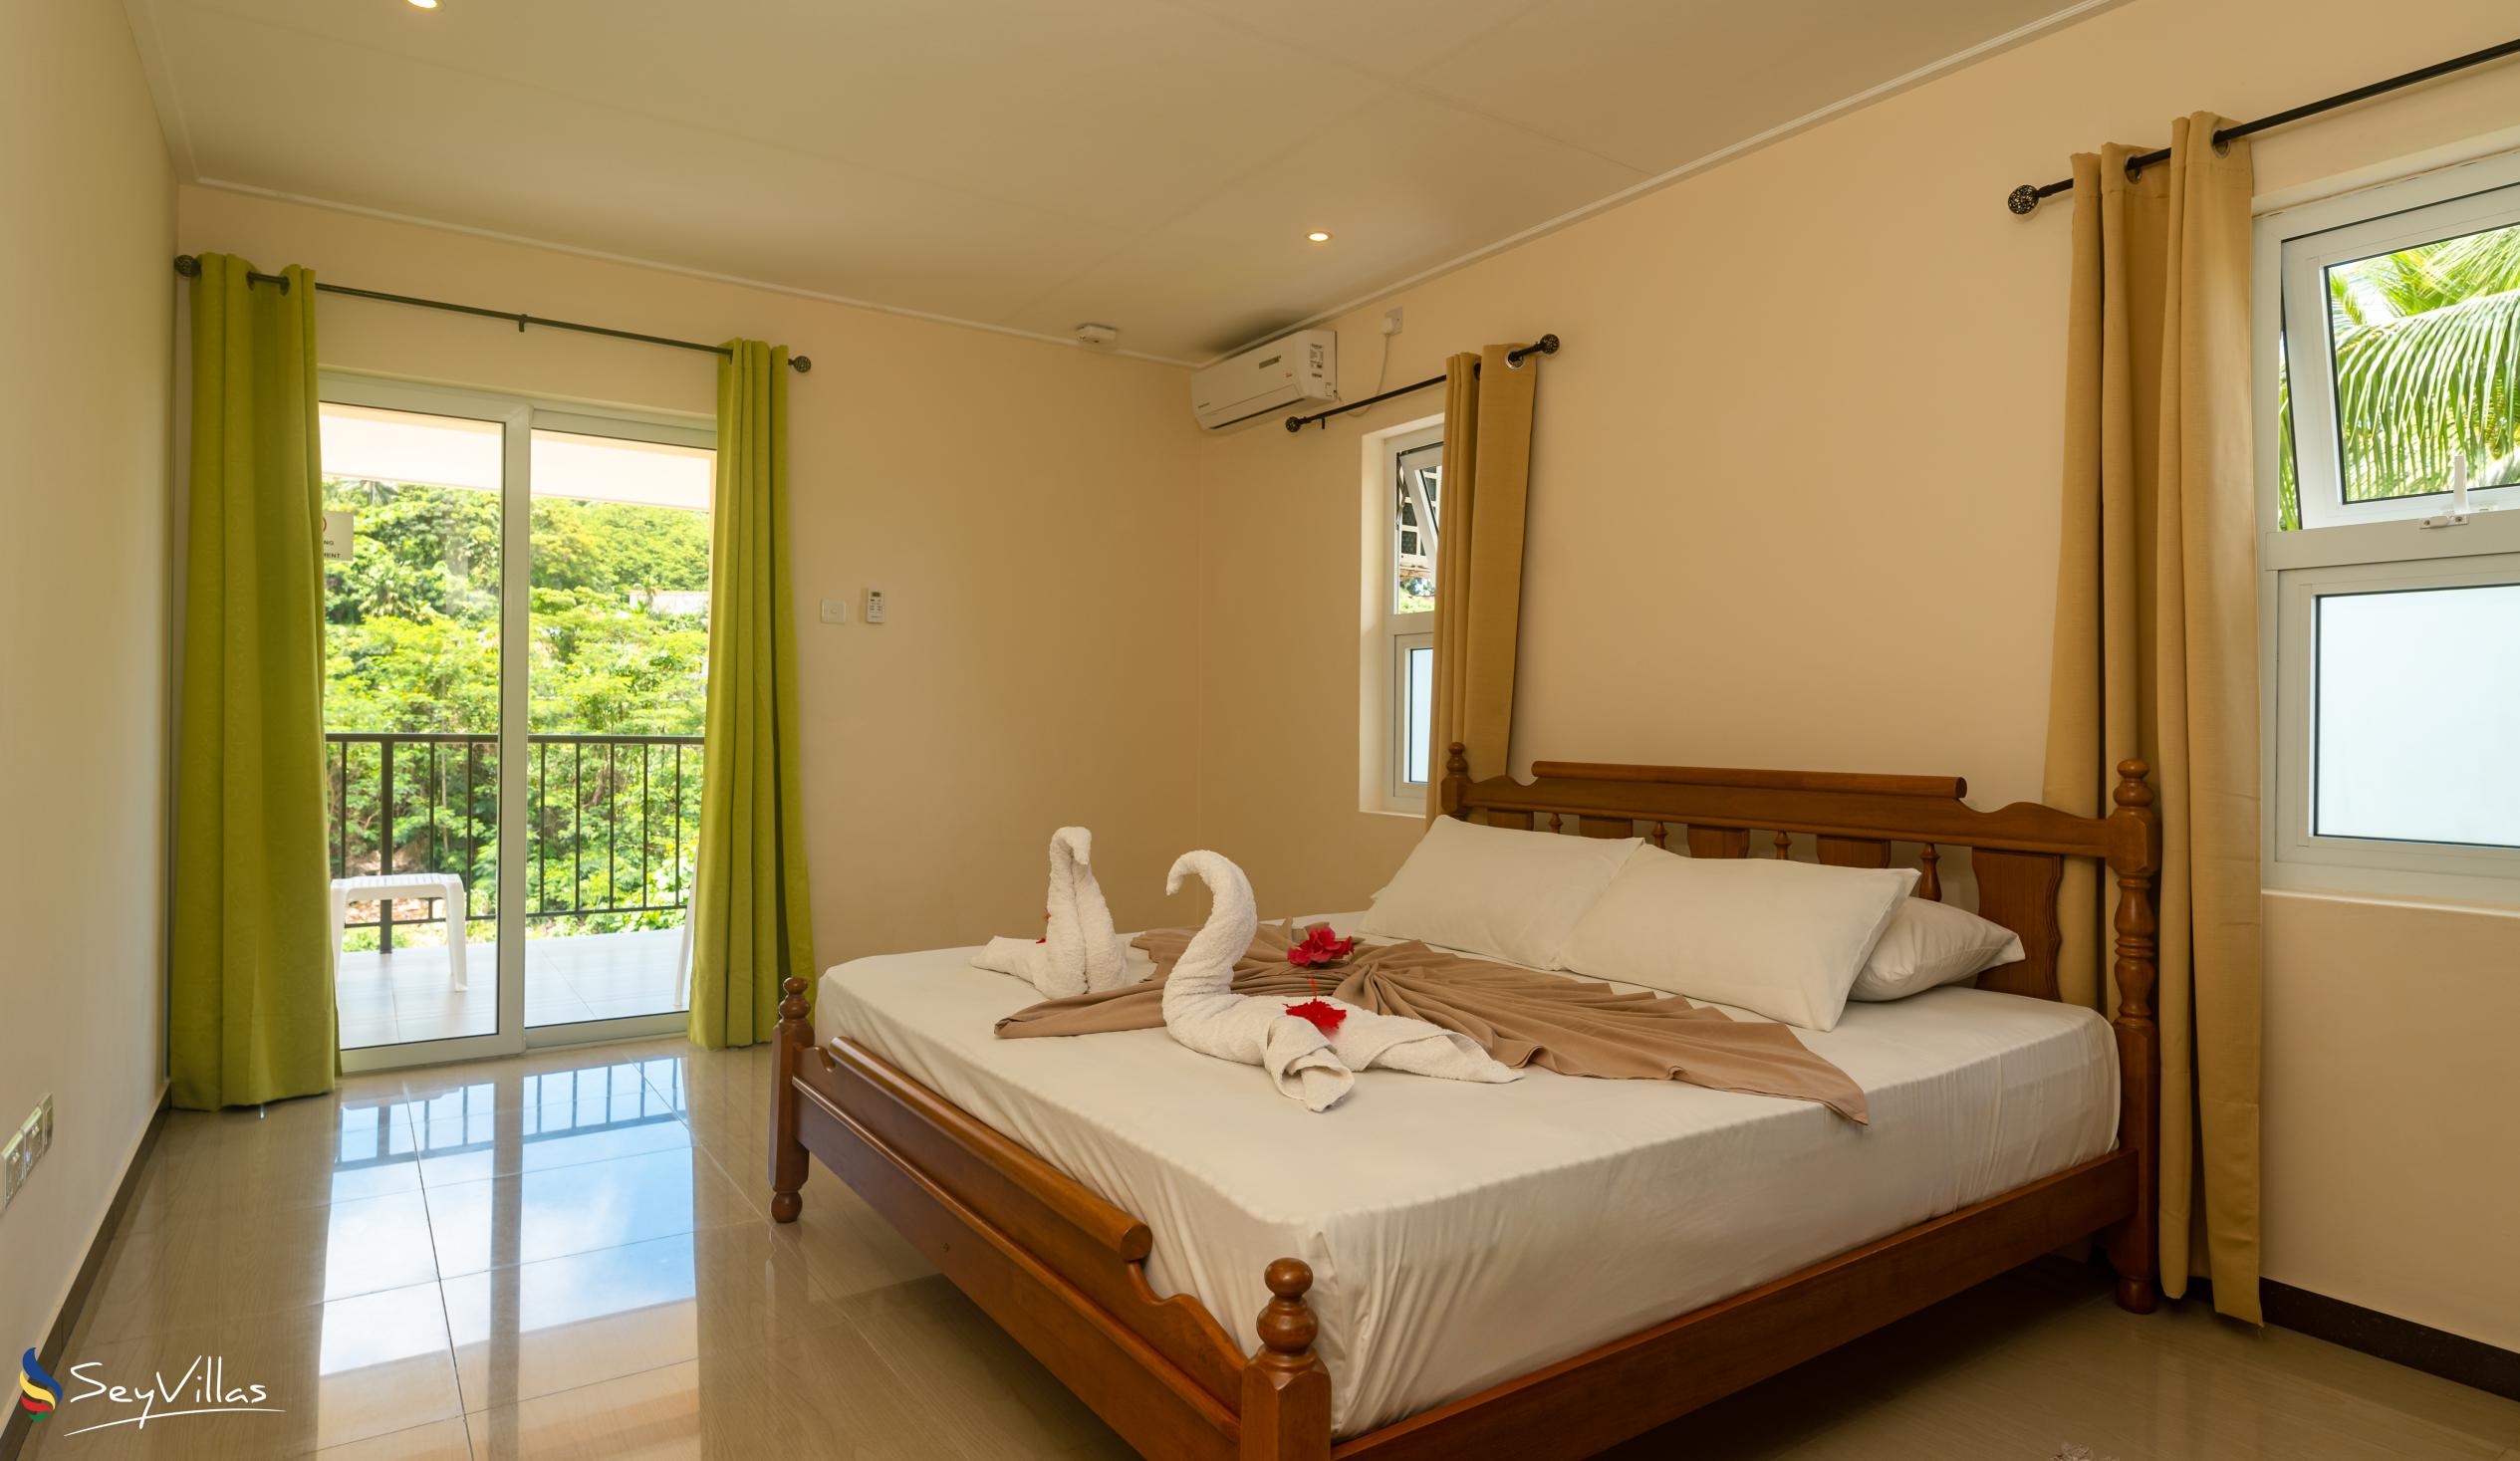 Photo 33: JAIDSS Holiday Apartments - 2-Bedroom Apartment - Mahé (Seychelles)